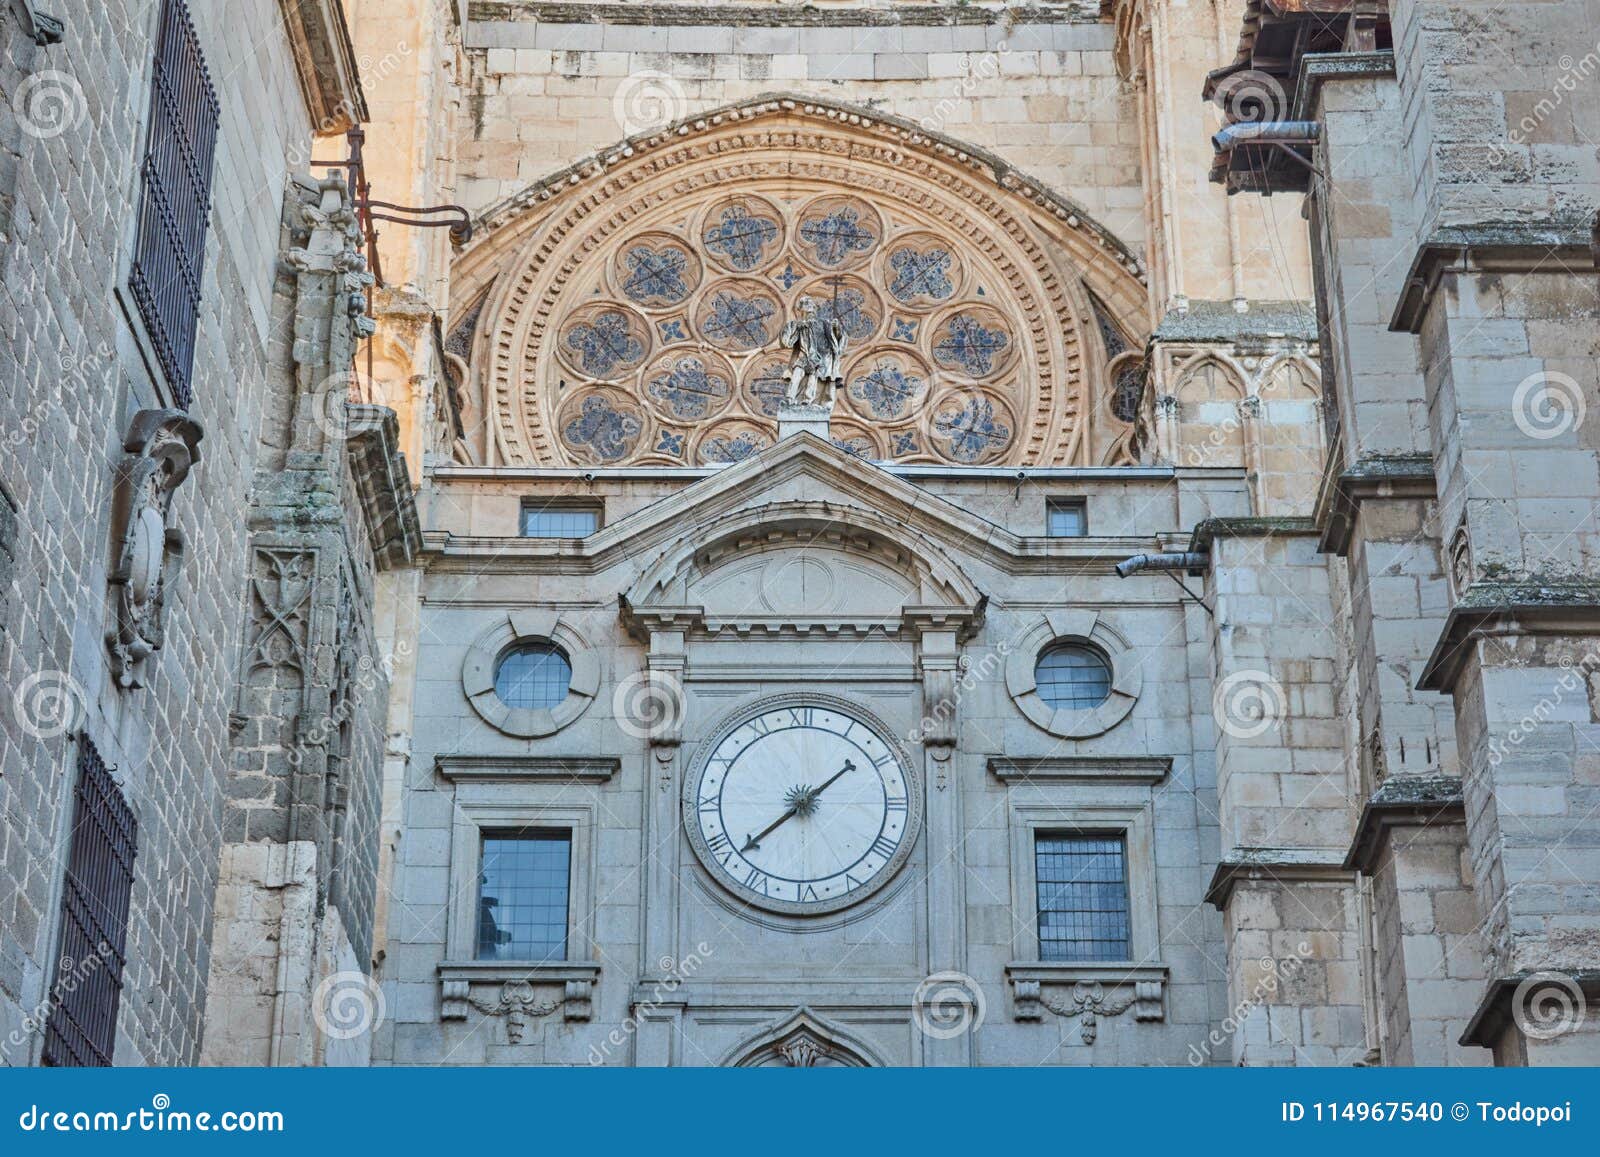 close-up of the primate cathedral of saint of mary of toledo and his clock / catedral primada santa maria de toledo y su reloj. to